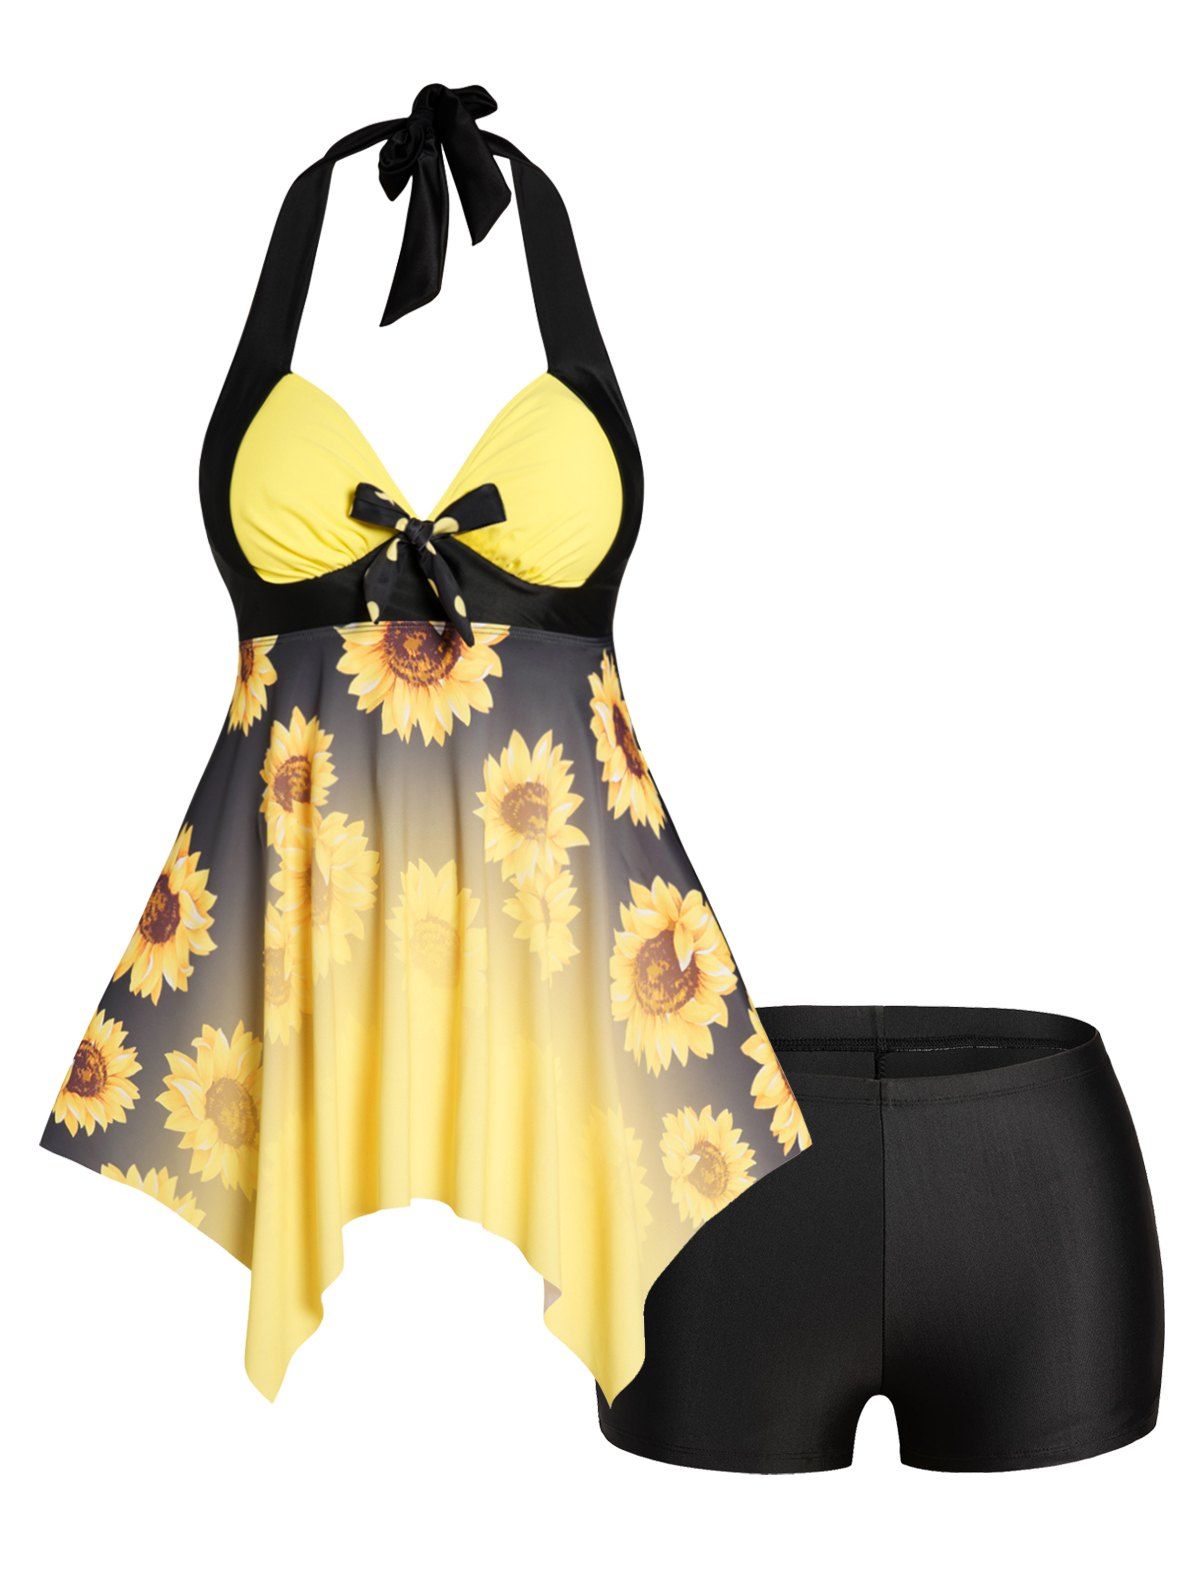 Plus Size Tankini Swimsuit Sunflower Print Halter Vacation Modest Swimsuit Padded Boyleg Bathing Suit - YELLOW 4X